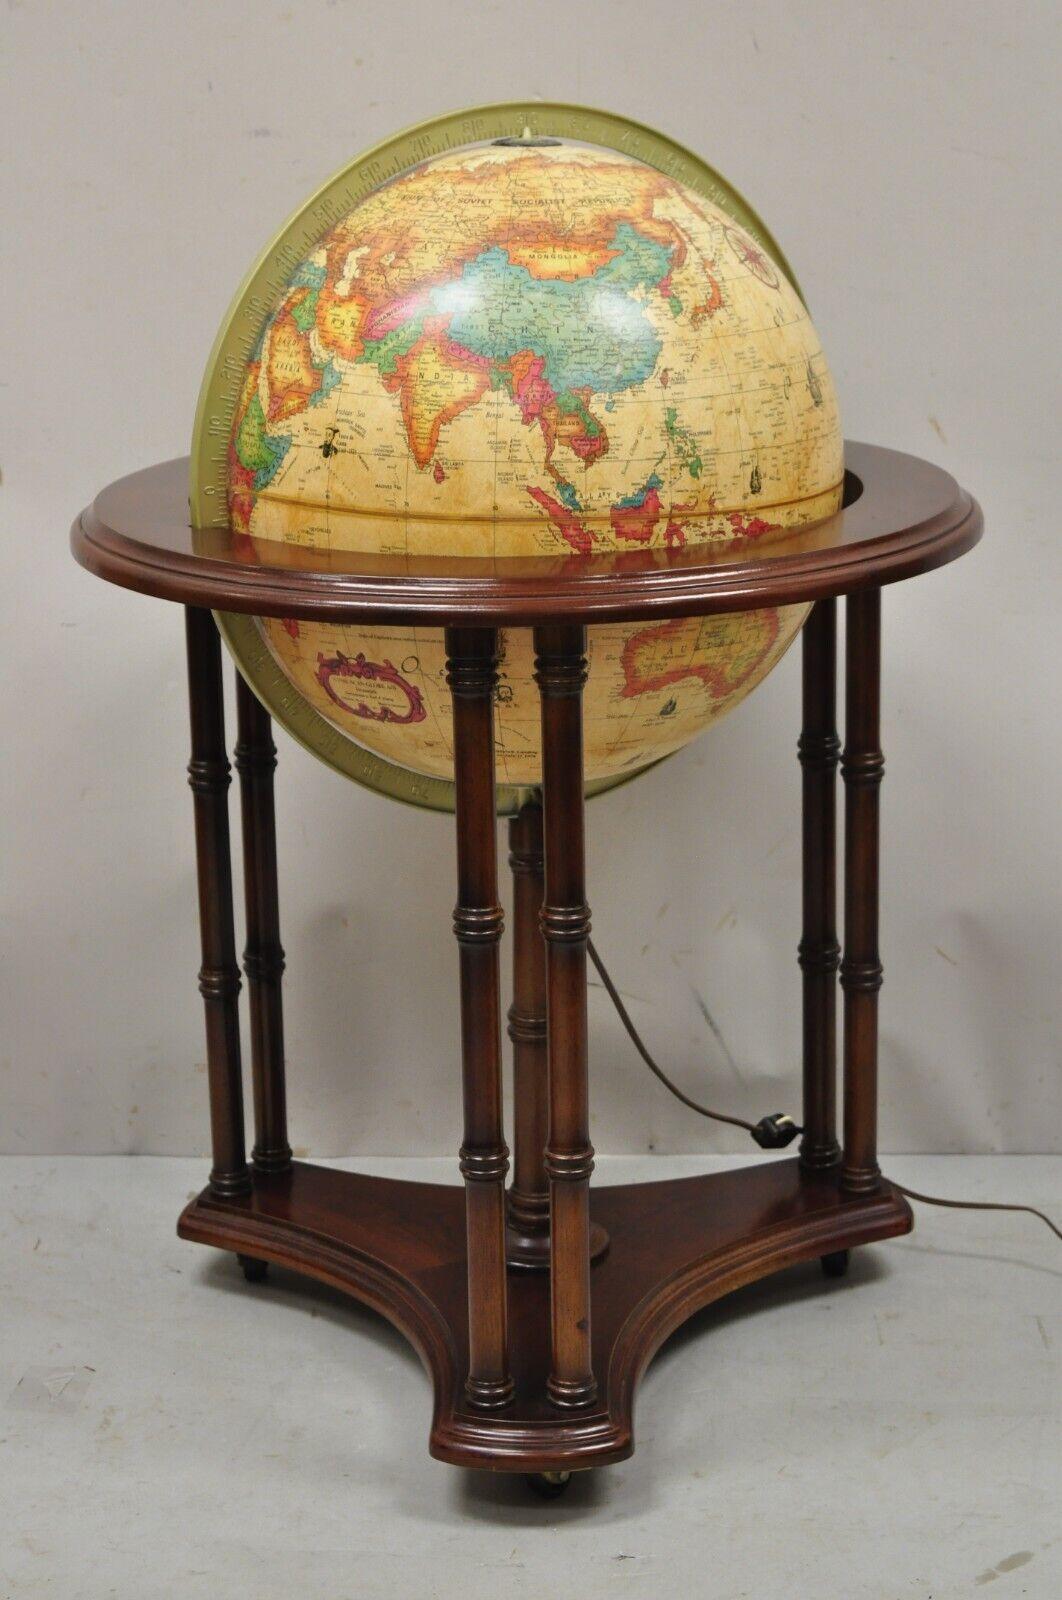 Vintage Scan Globe A/S Illuminated Lighted Globe on Stand, Denmark 1